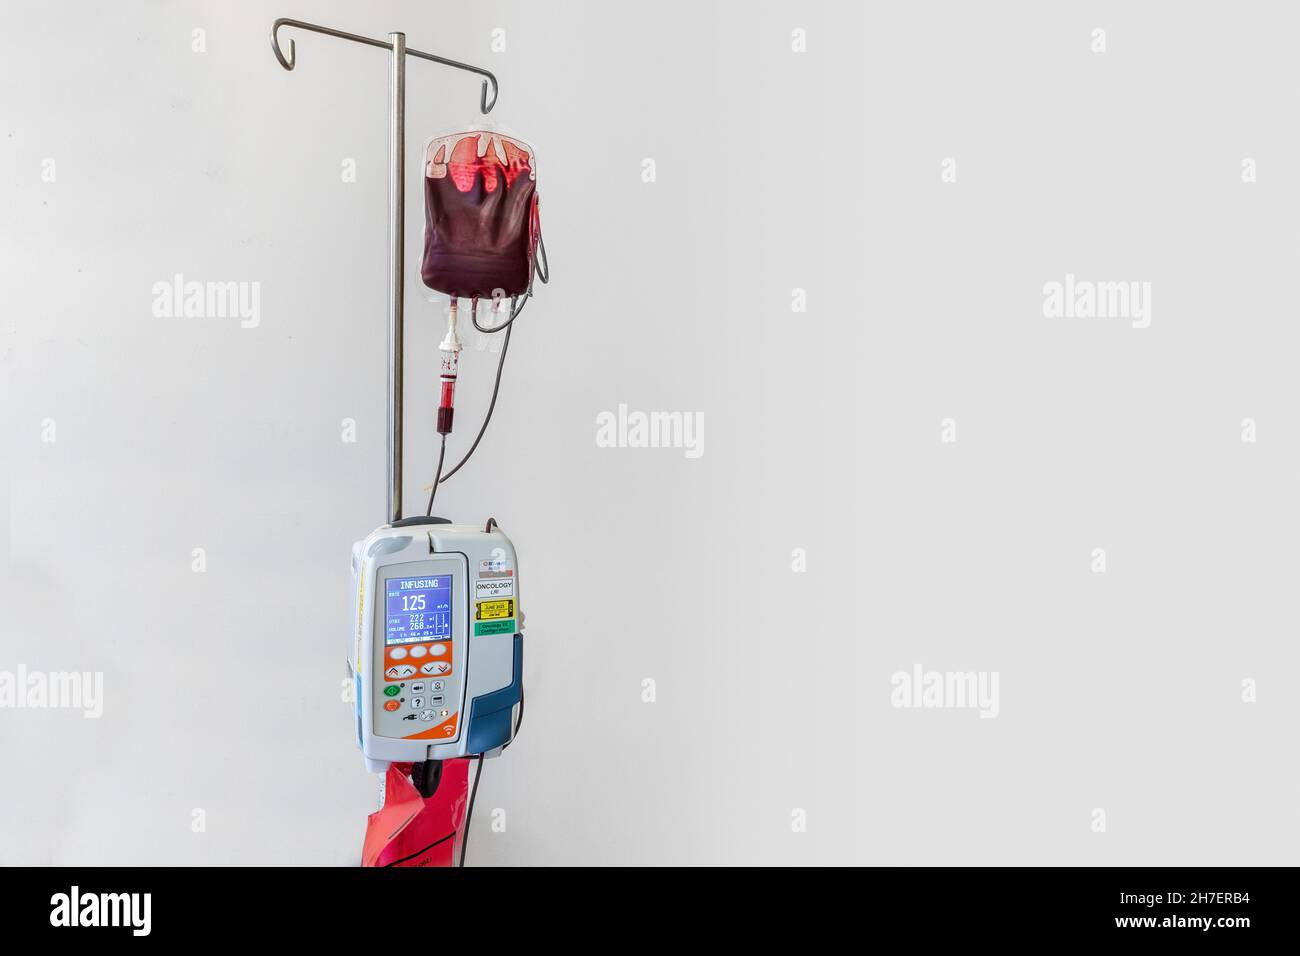 Blood transfusion in progress using Alaris Nexus GP volumetric pump with copy space Stock Photo